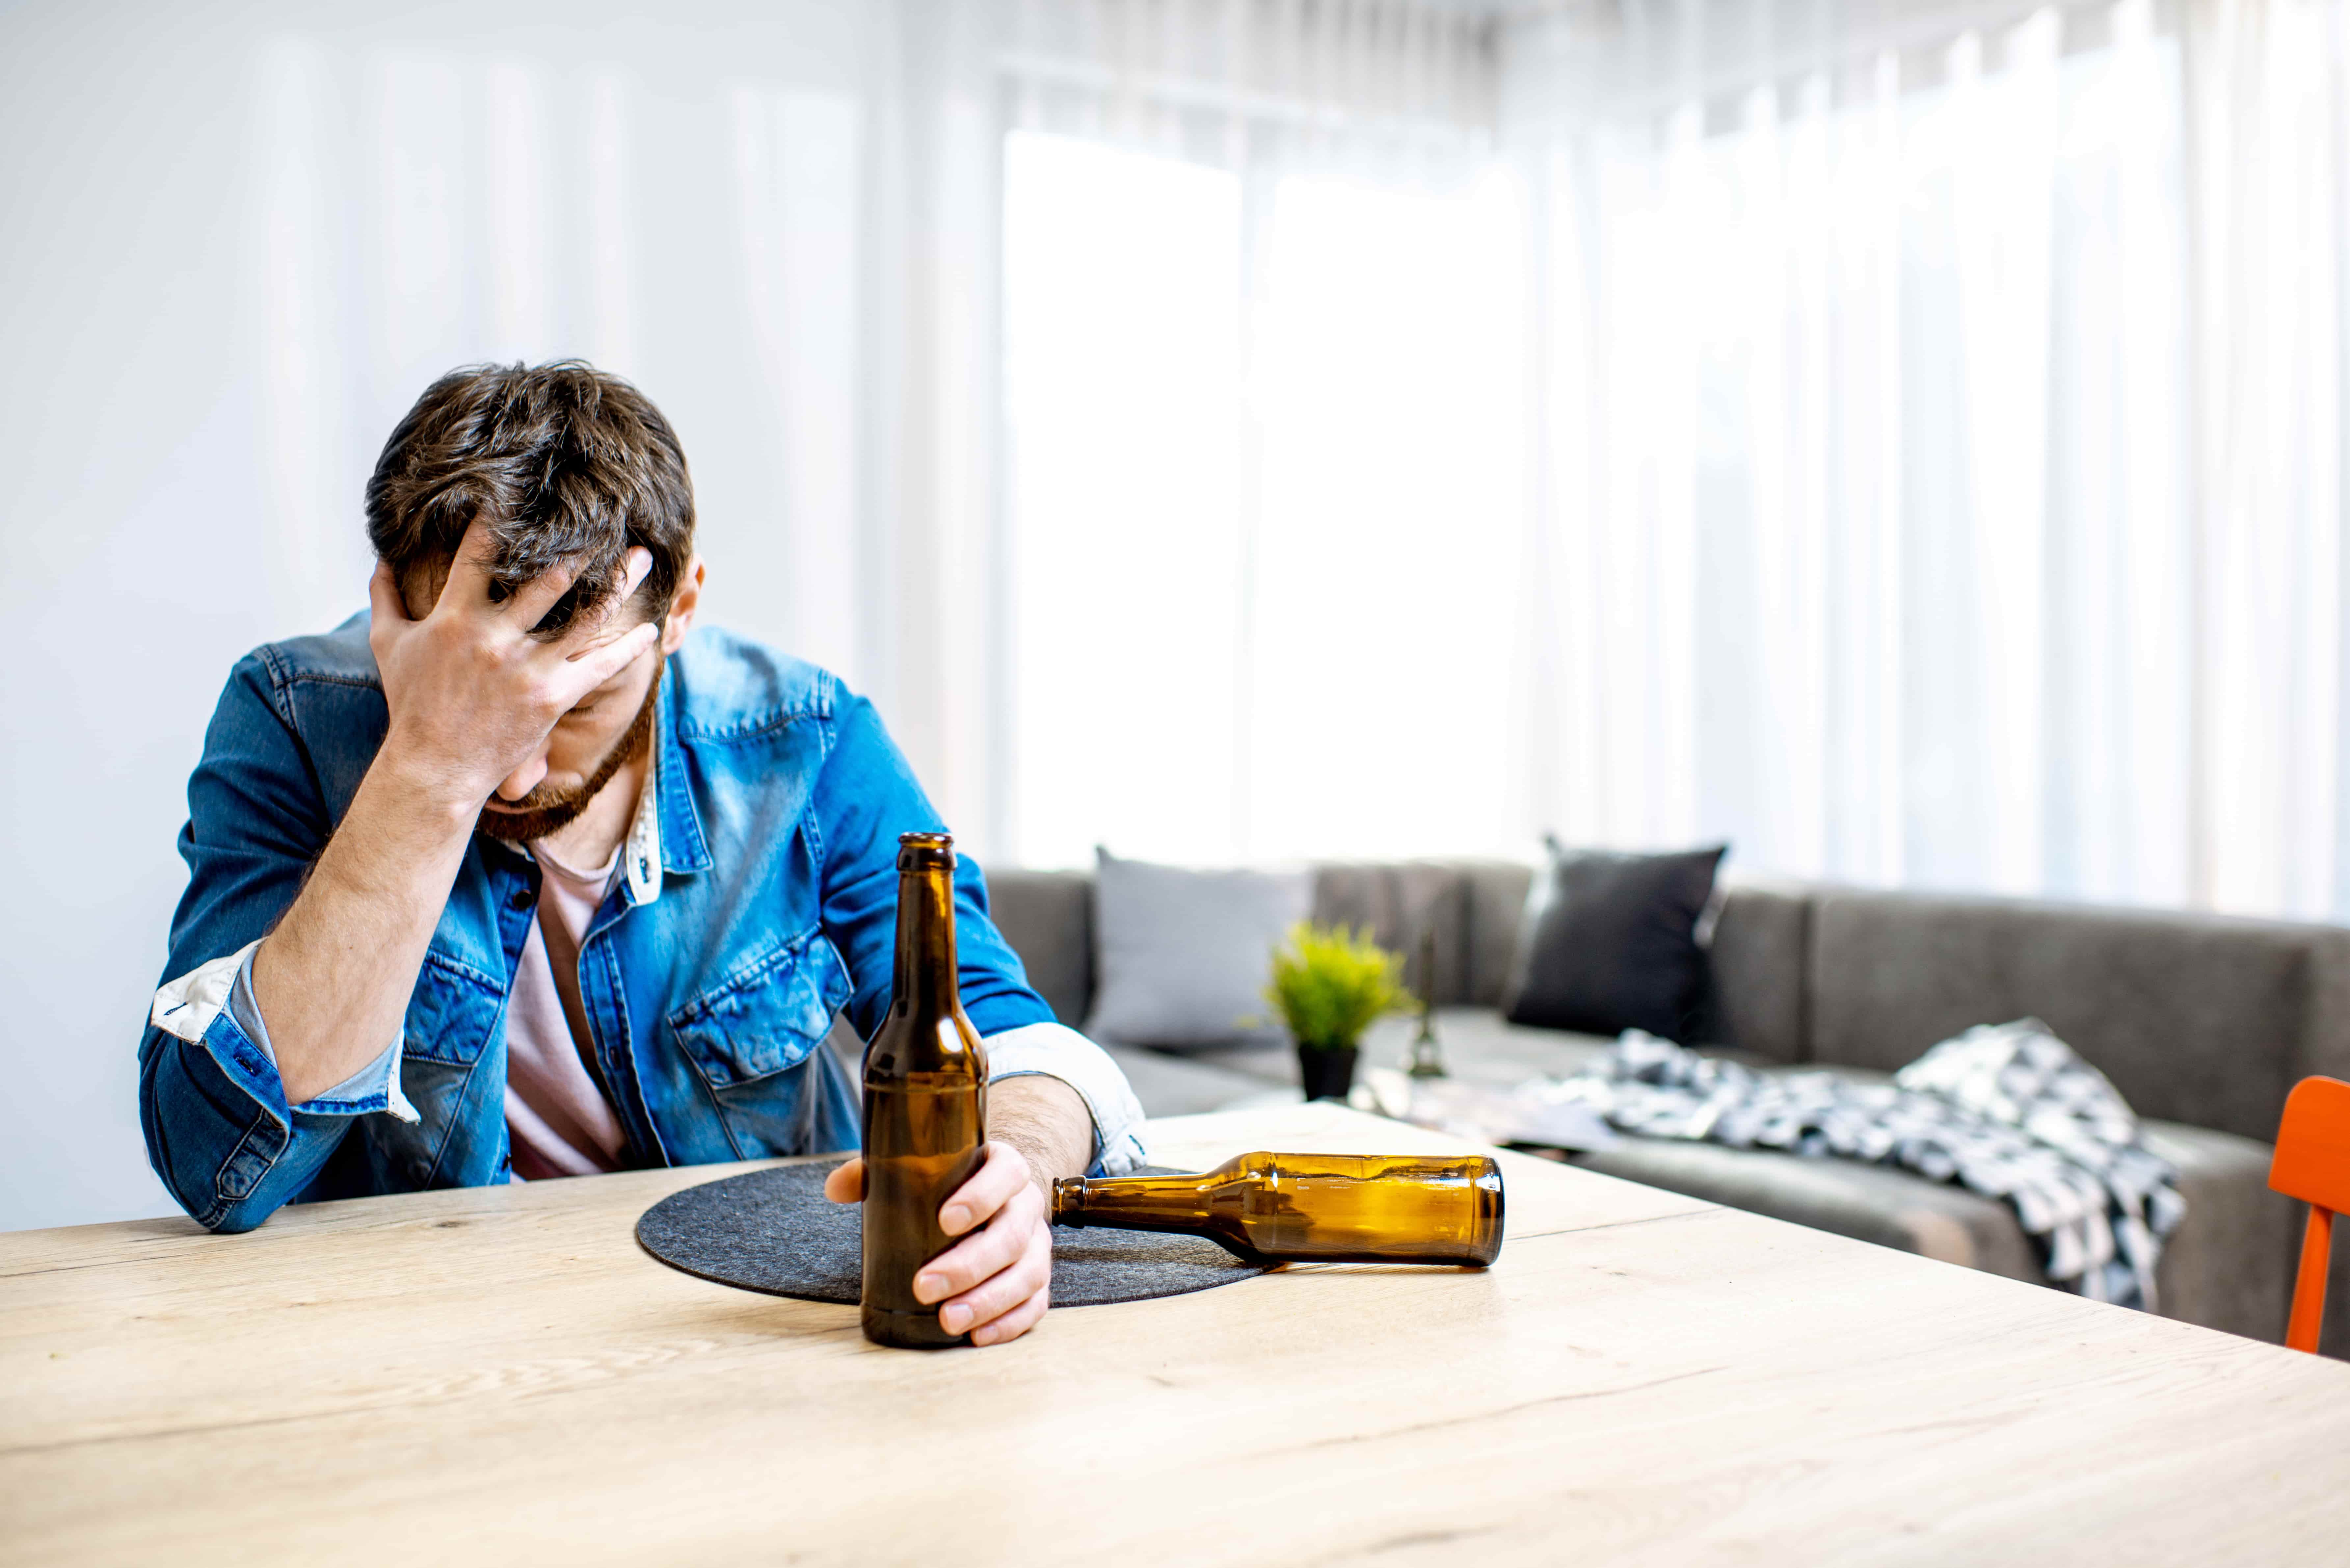 alkol-aliskanligi-uyku-problemlerini-tetikler